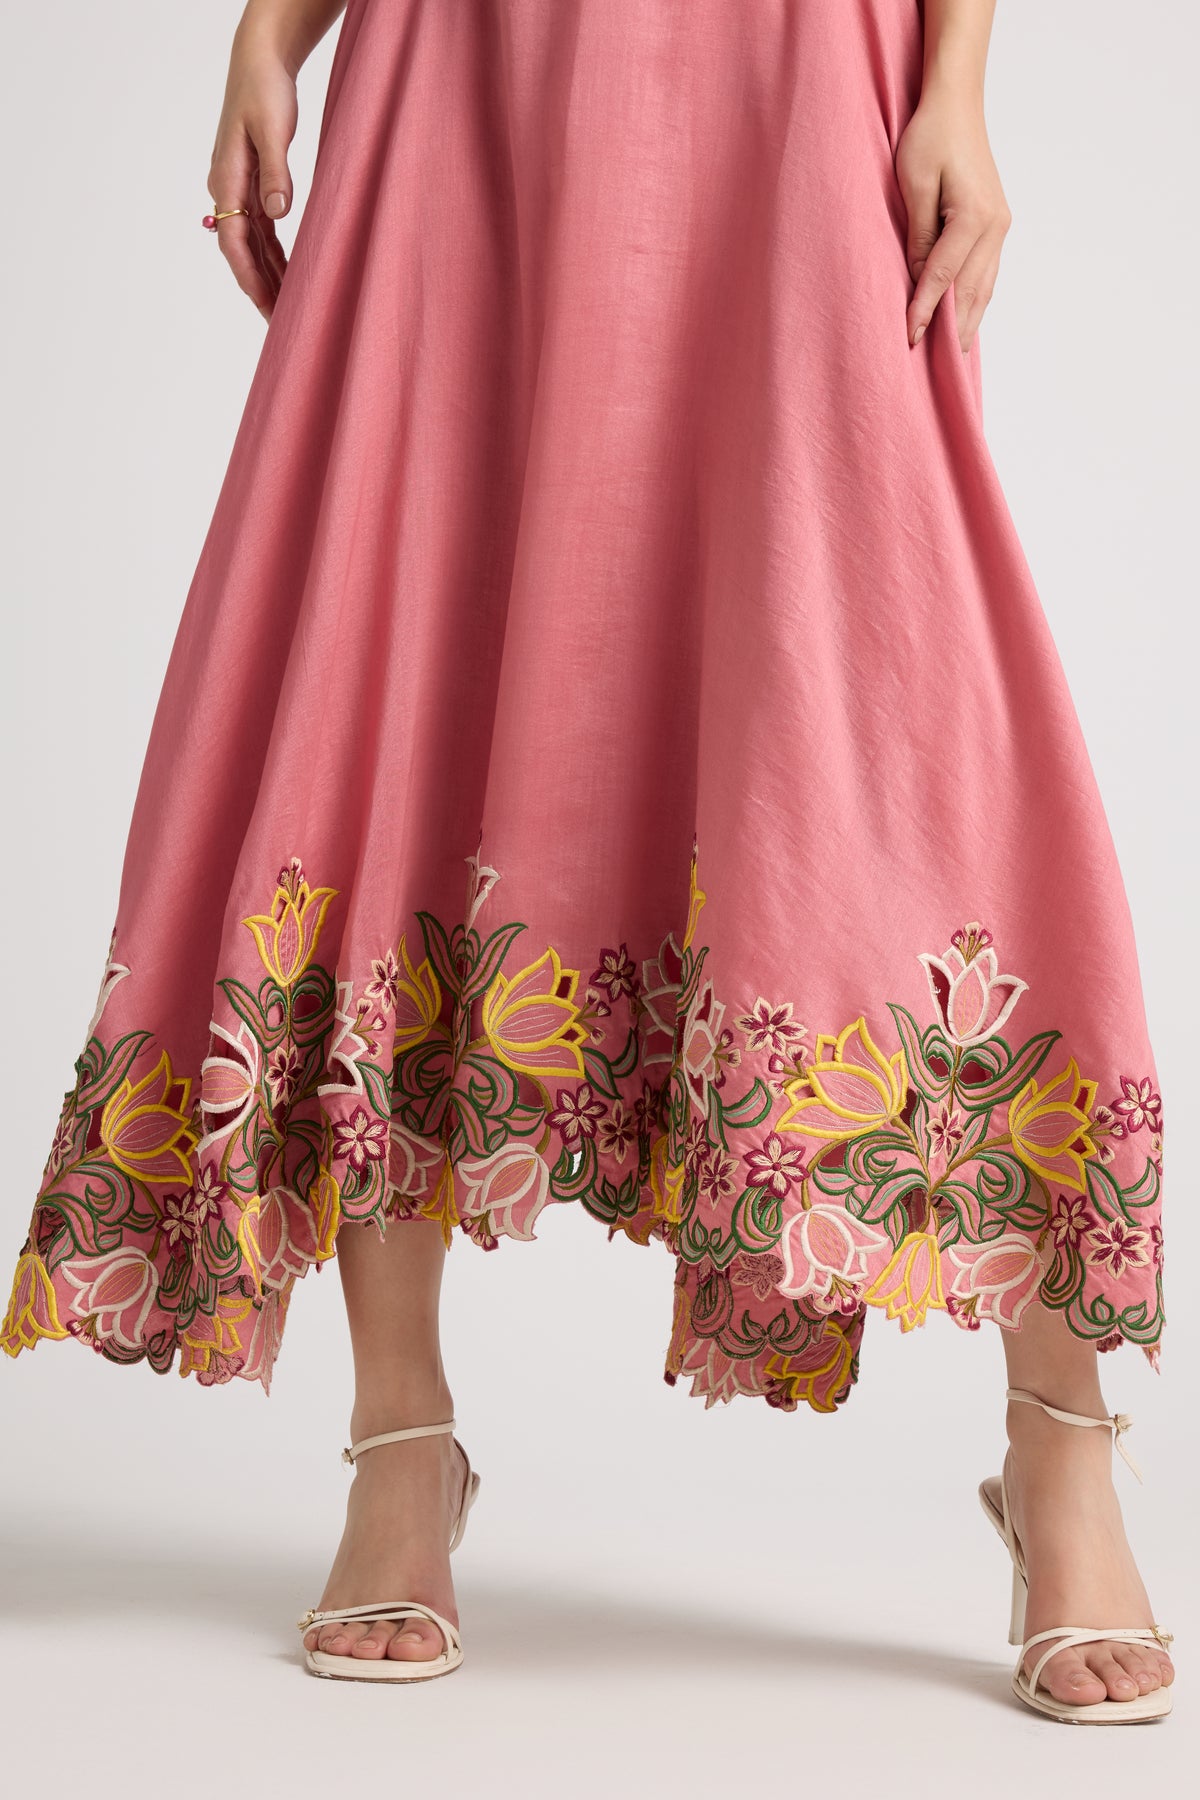 Blush Floral Cutwork Corset Dress